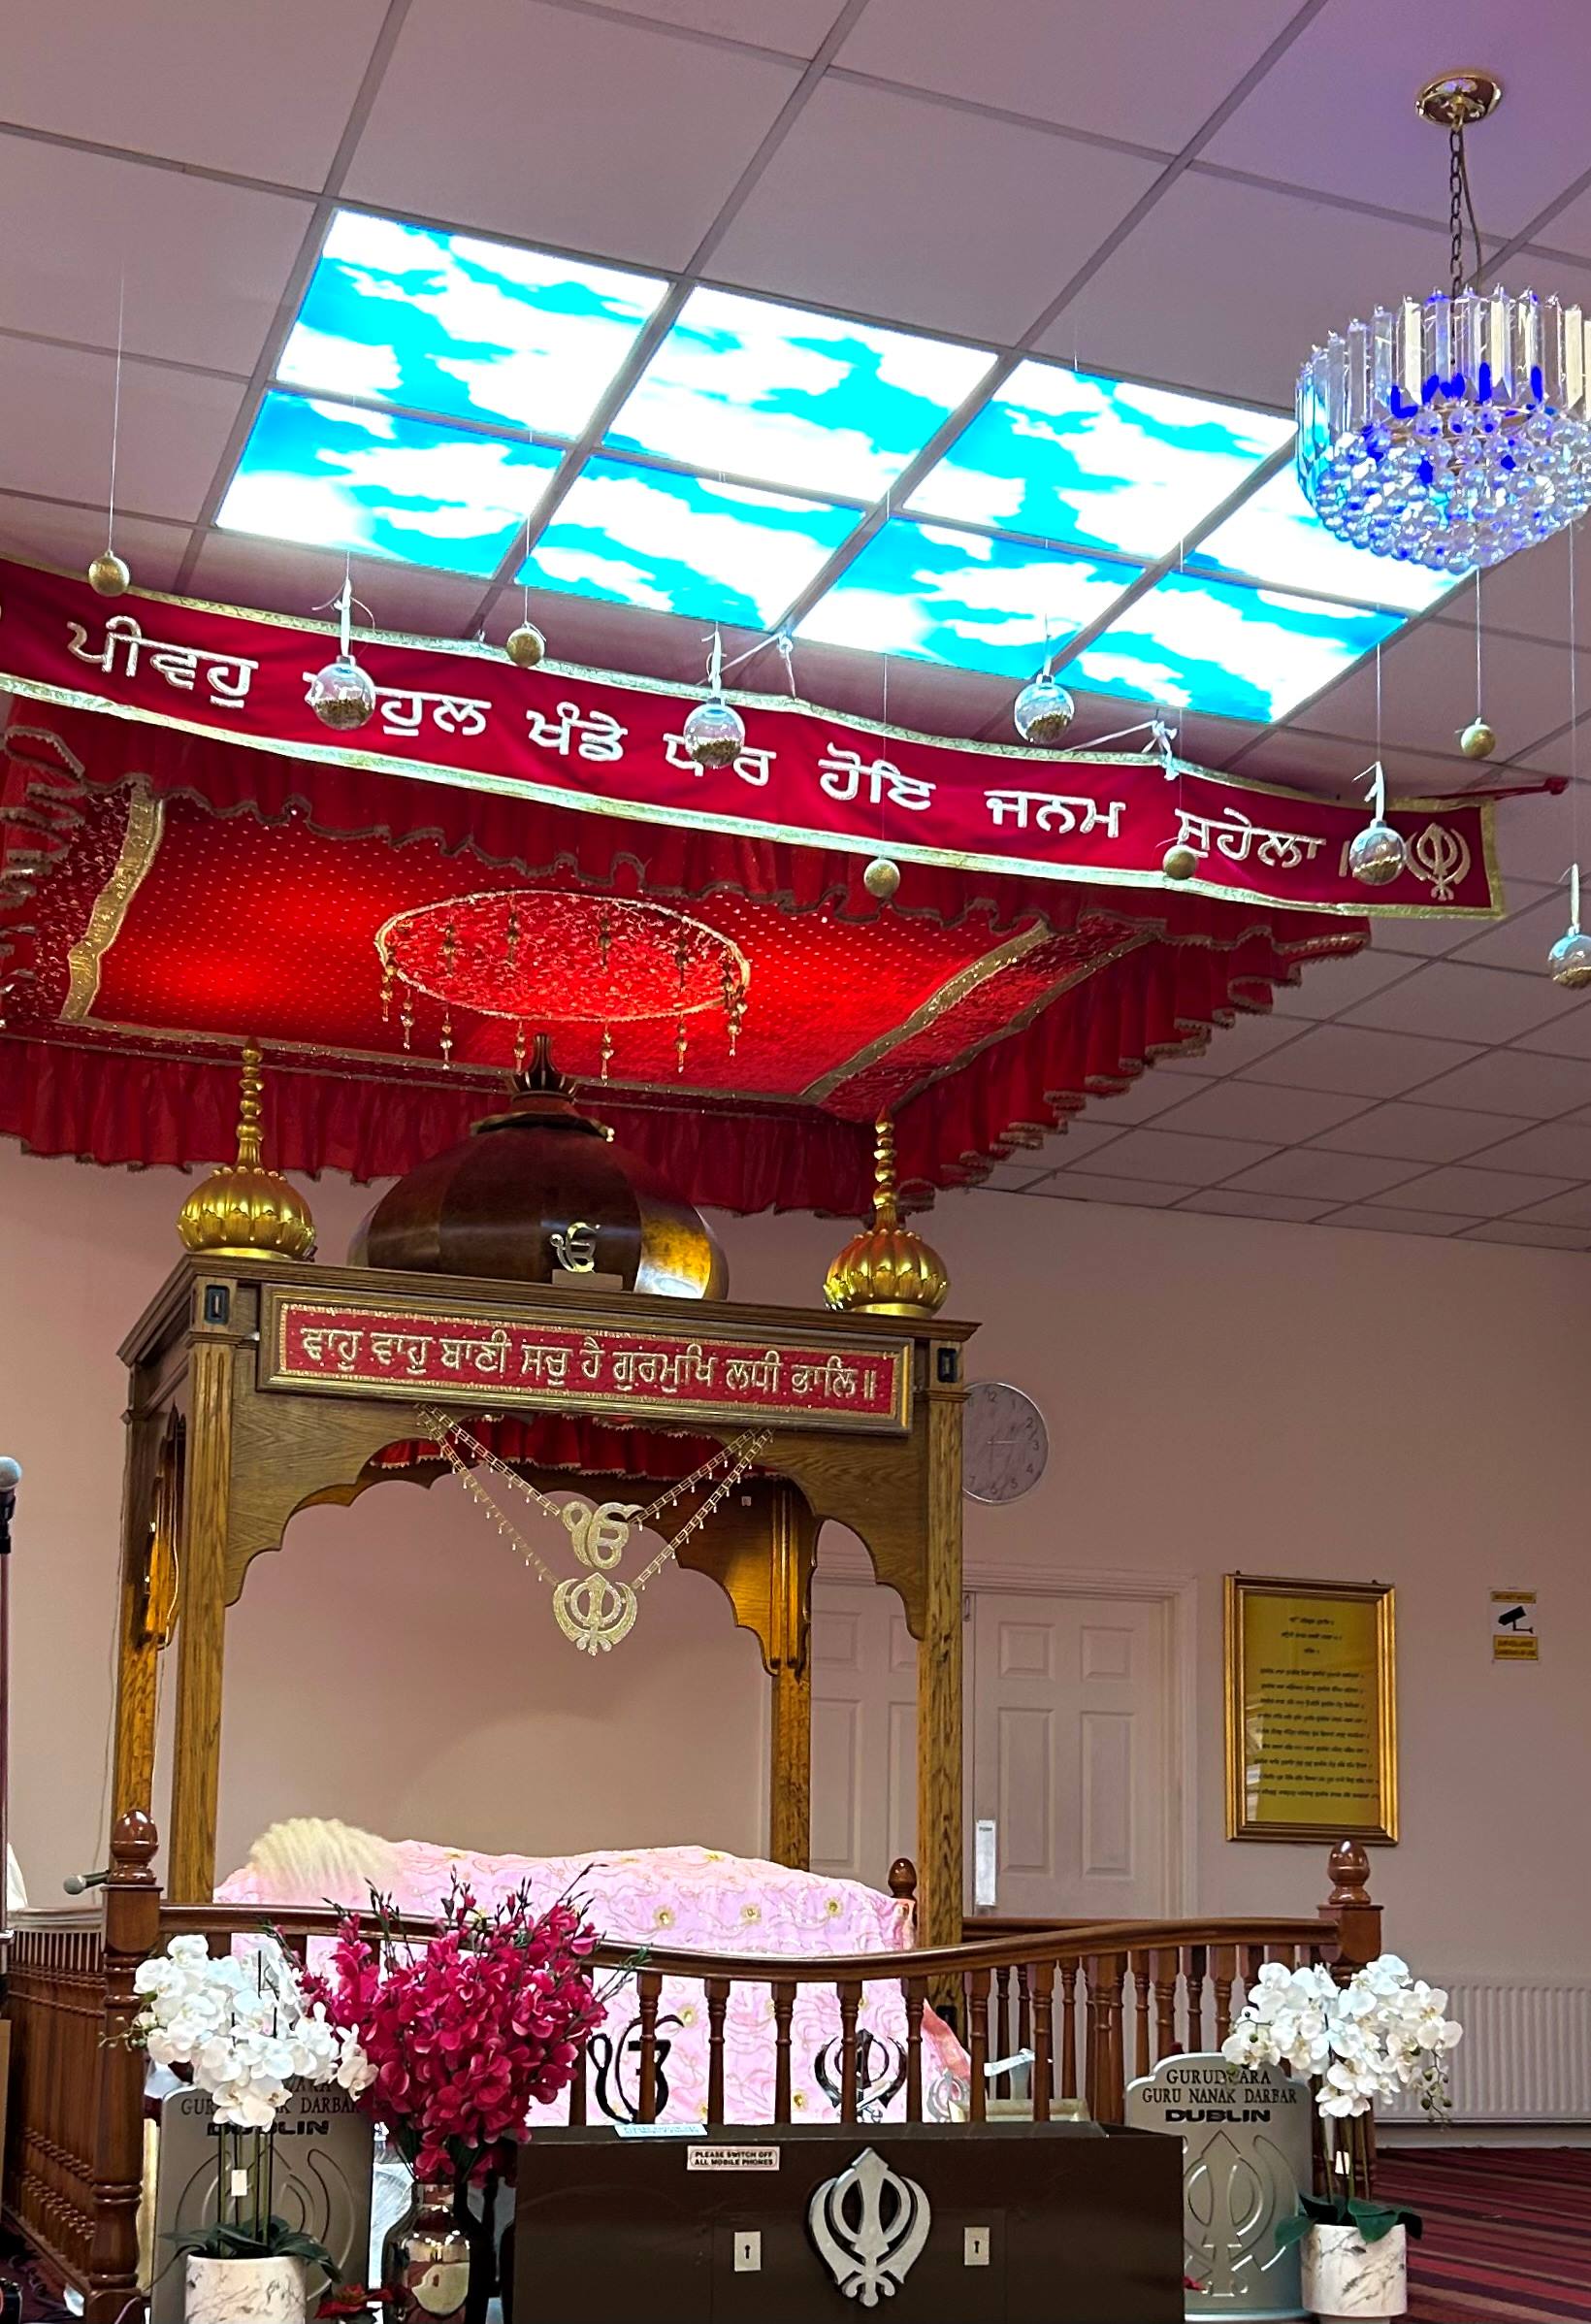 Guru Nanak Darbar, a Sikh gurdwara